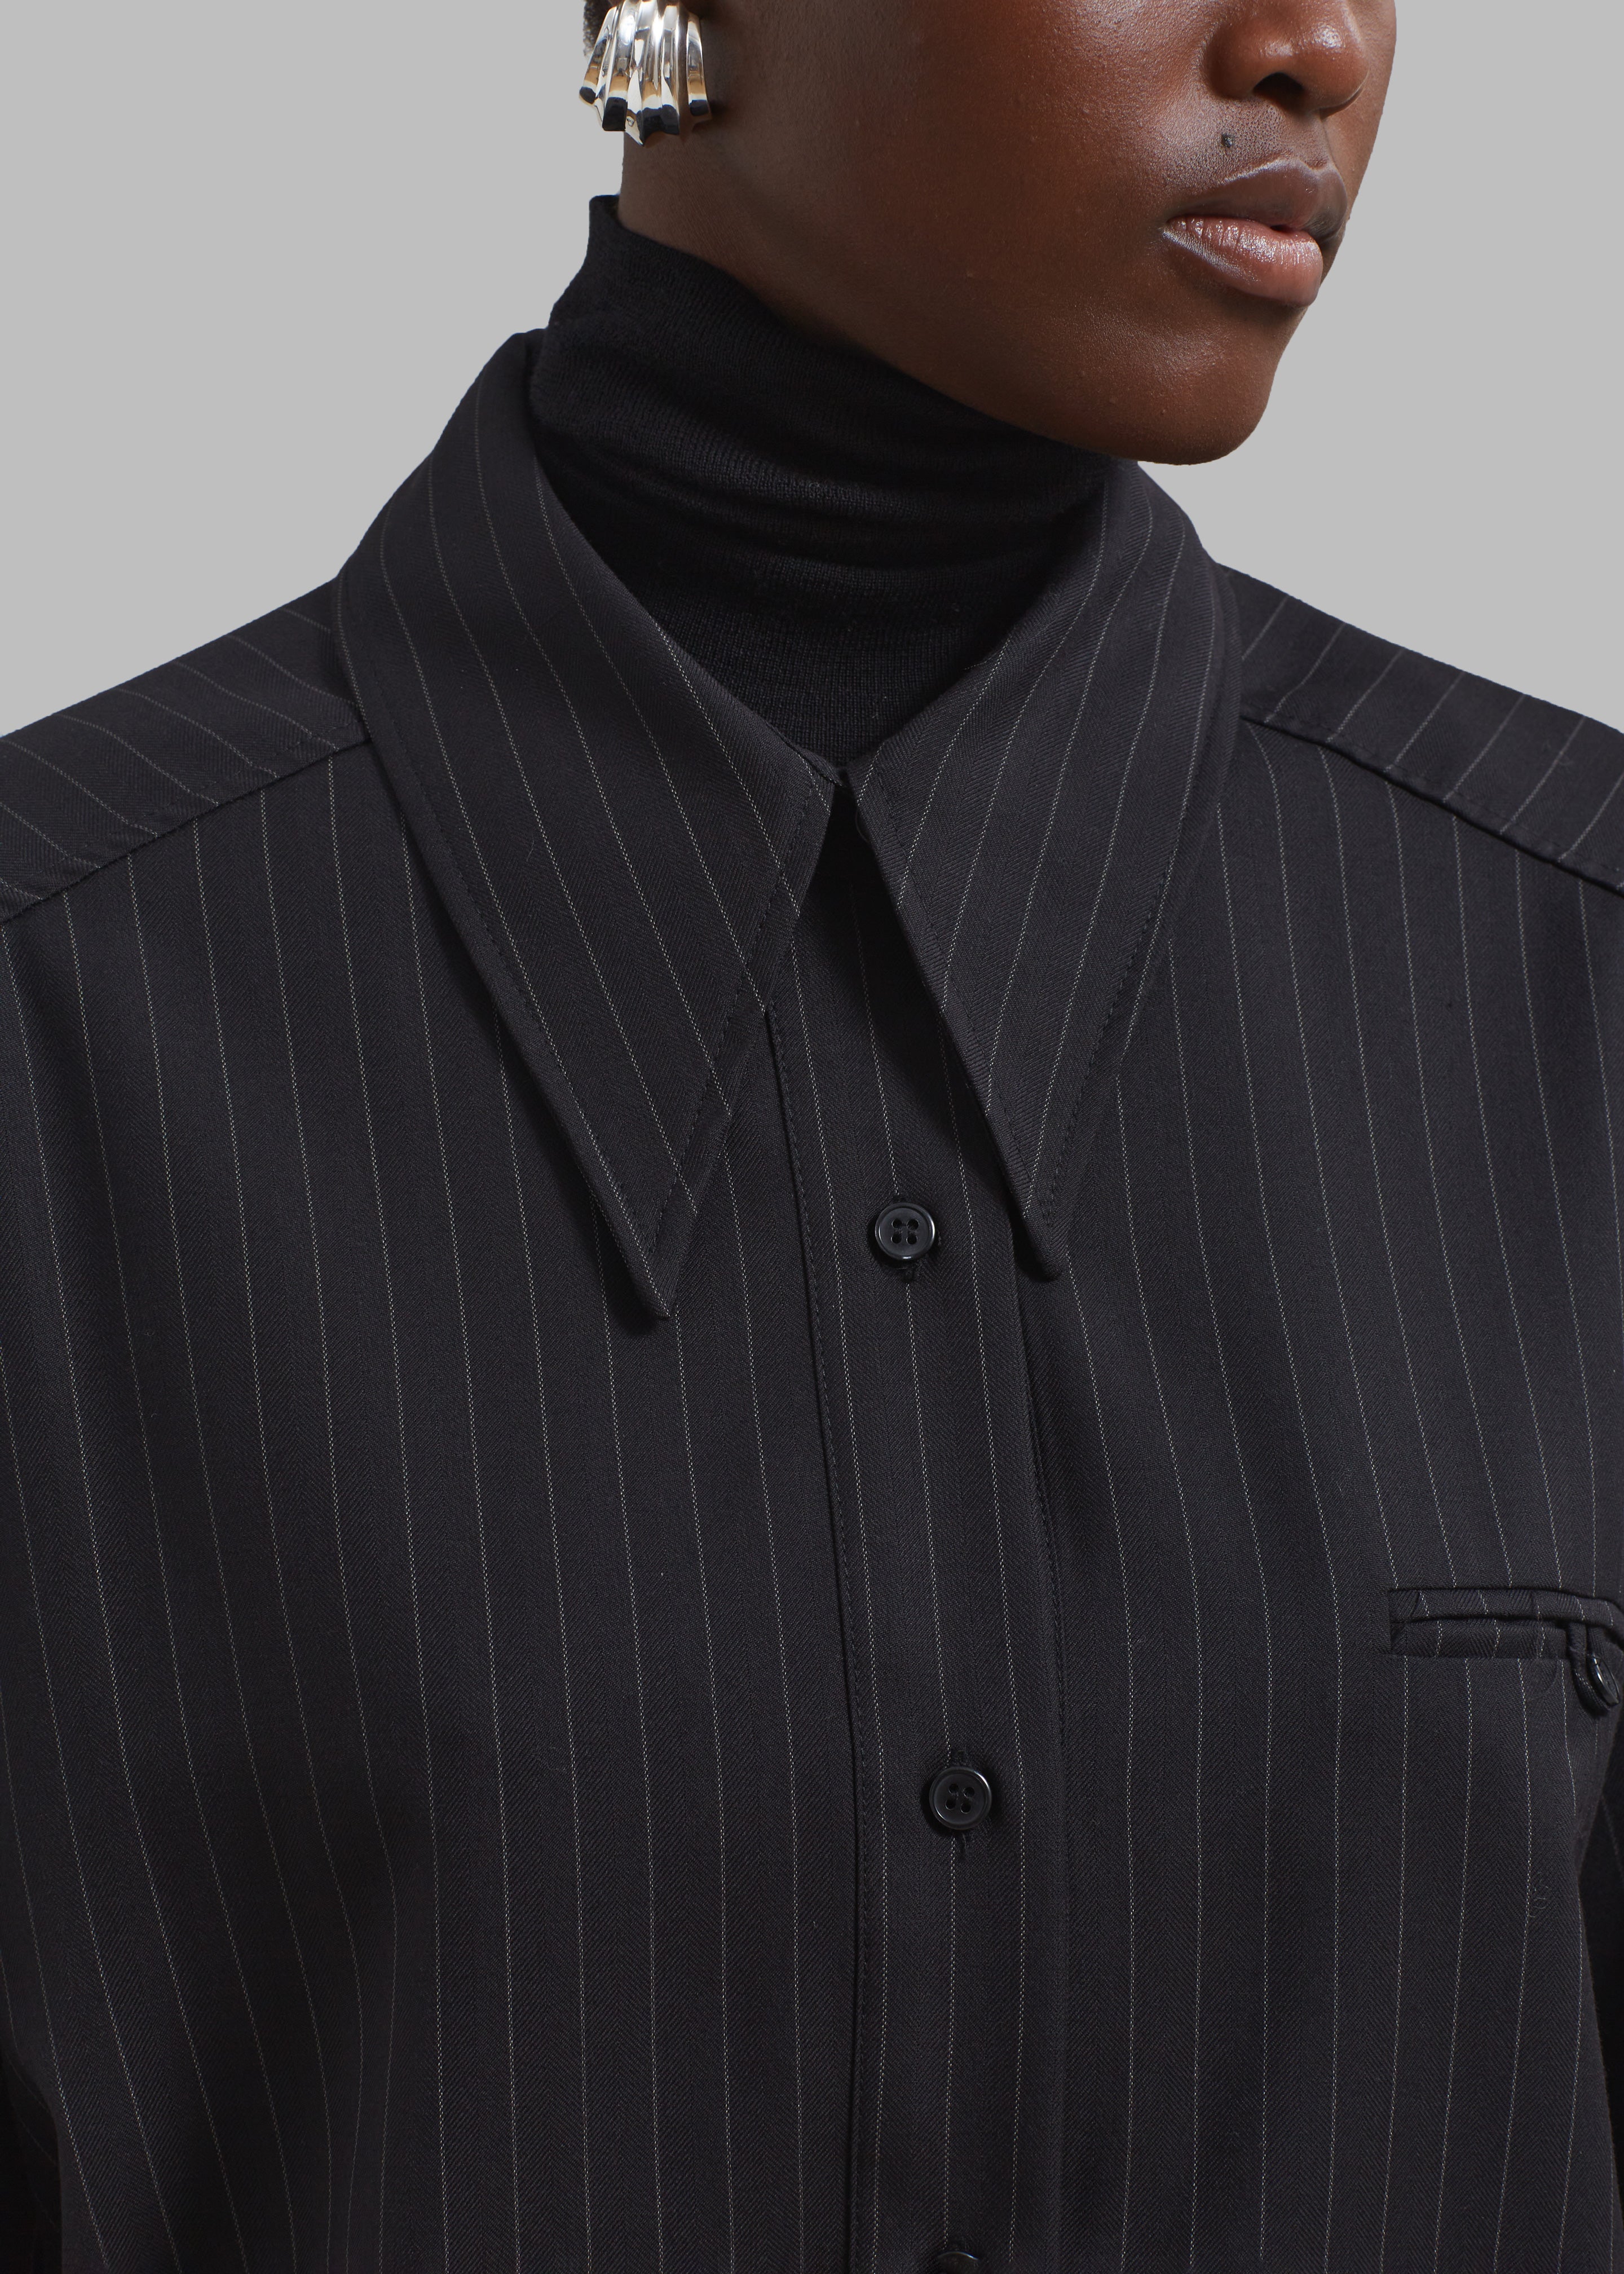 Kerry Button Up Shirt - Black Pinstripe - 12